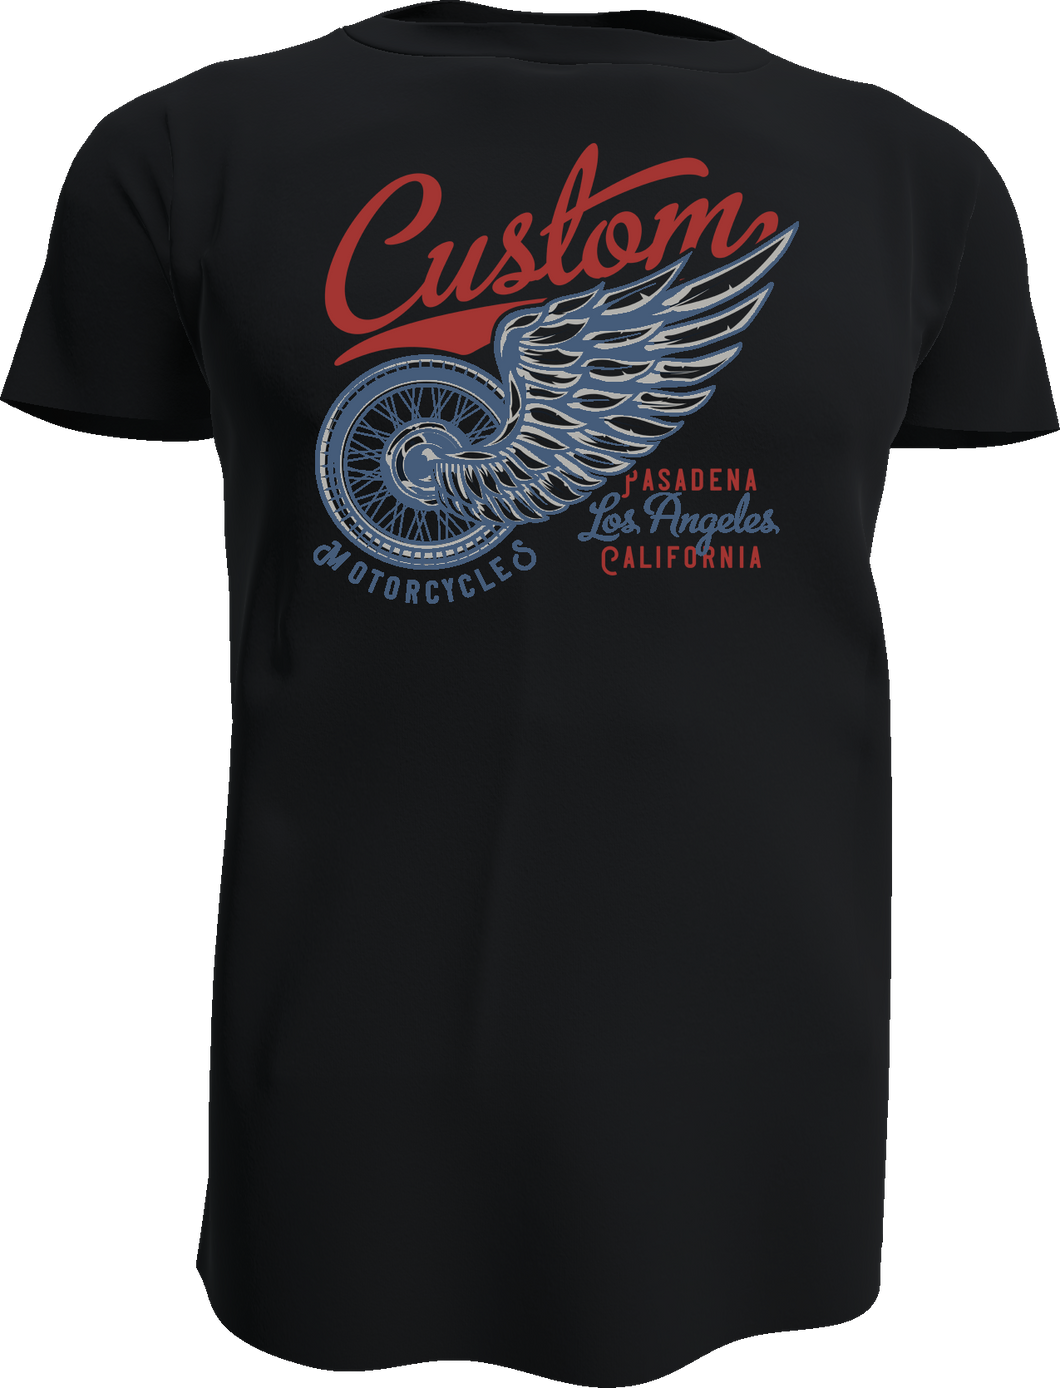 Custom Motorcycle Shirt